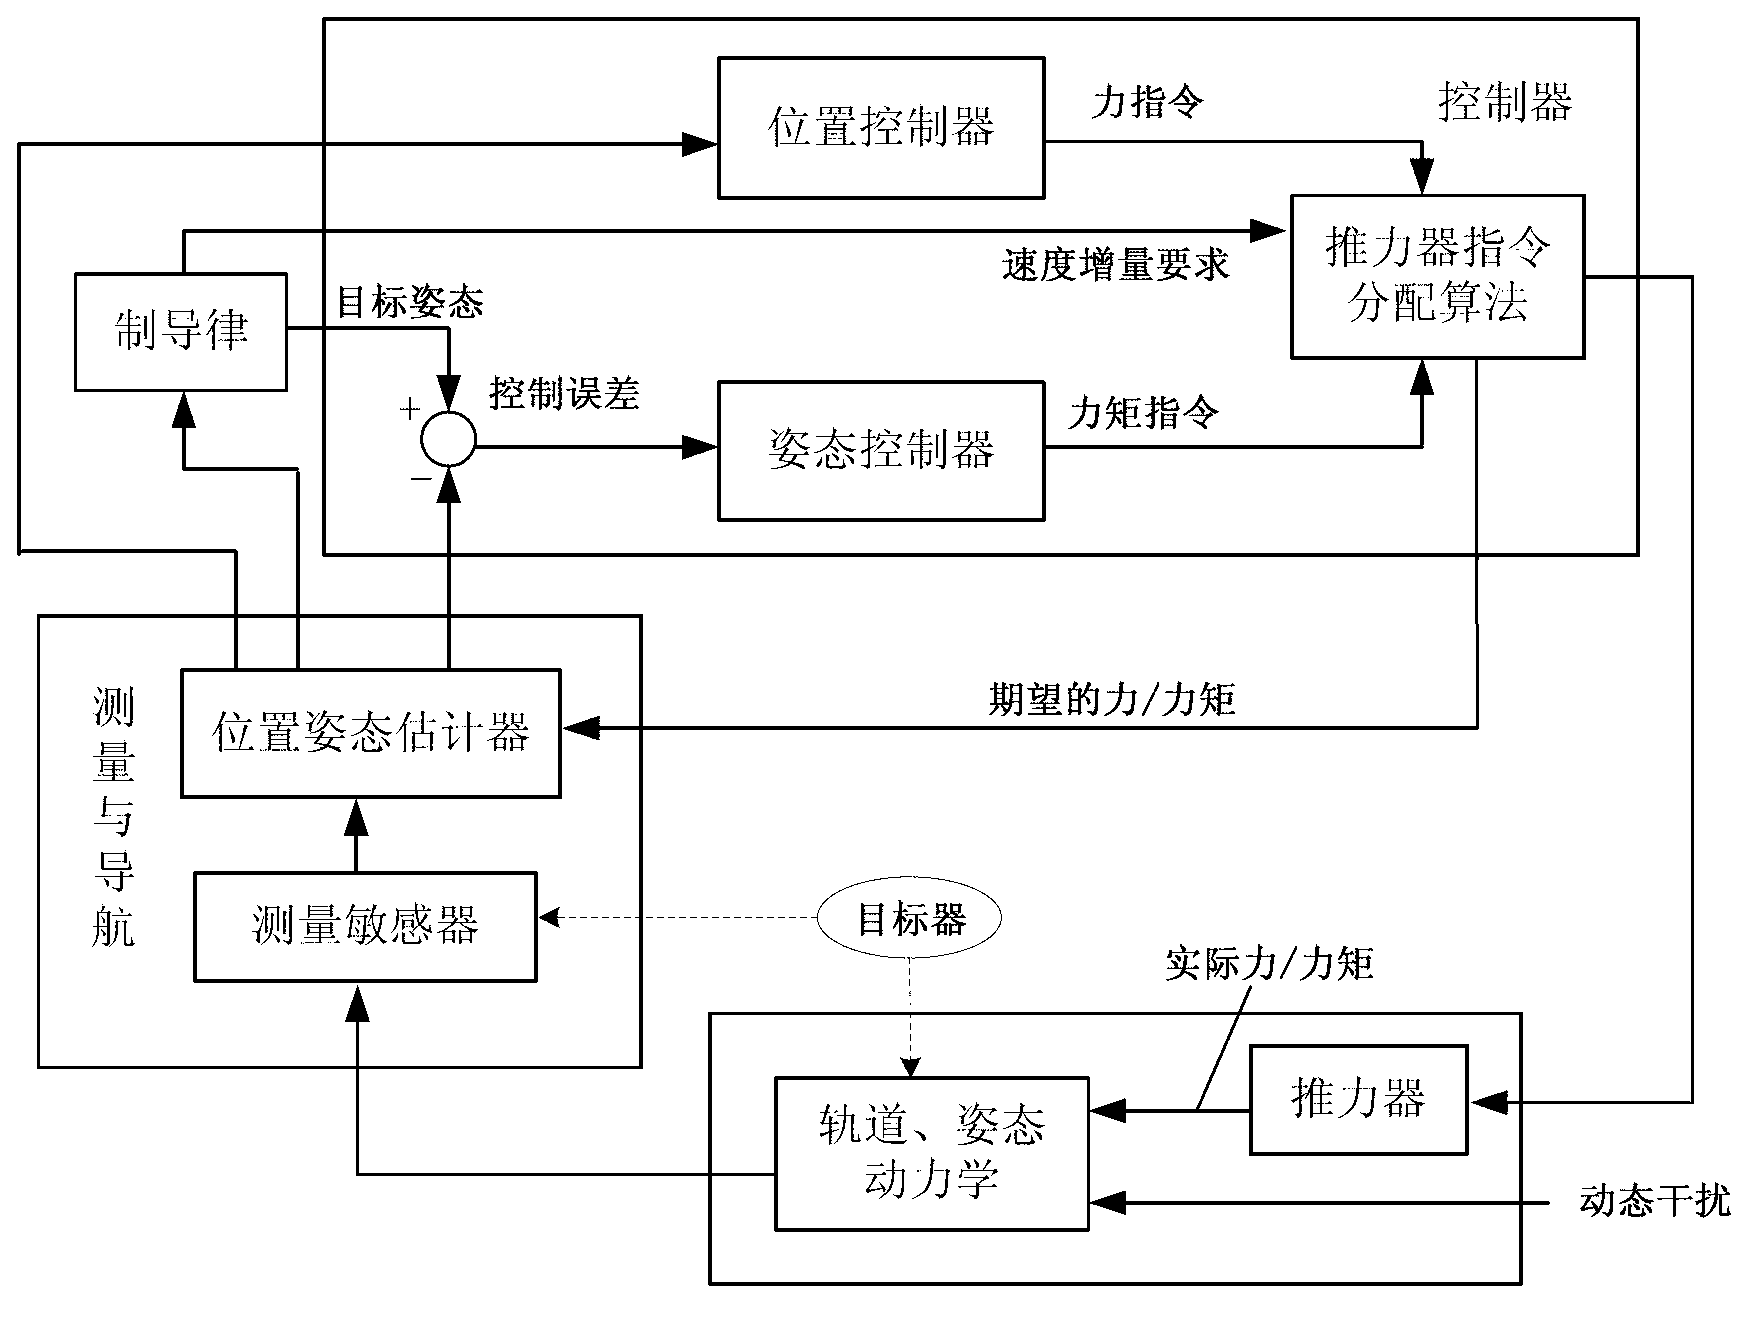 Phase plane self-adaptation control method based on characteristic model